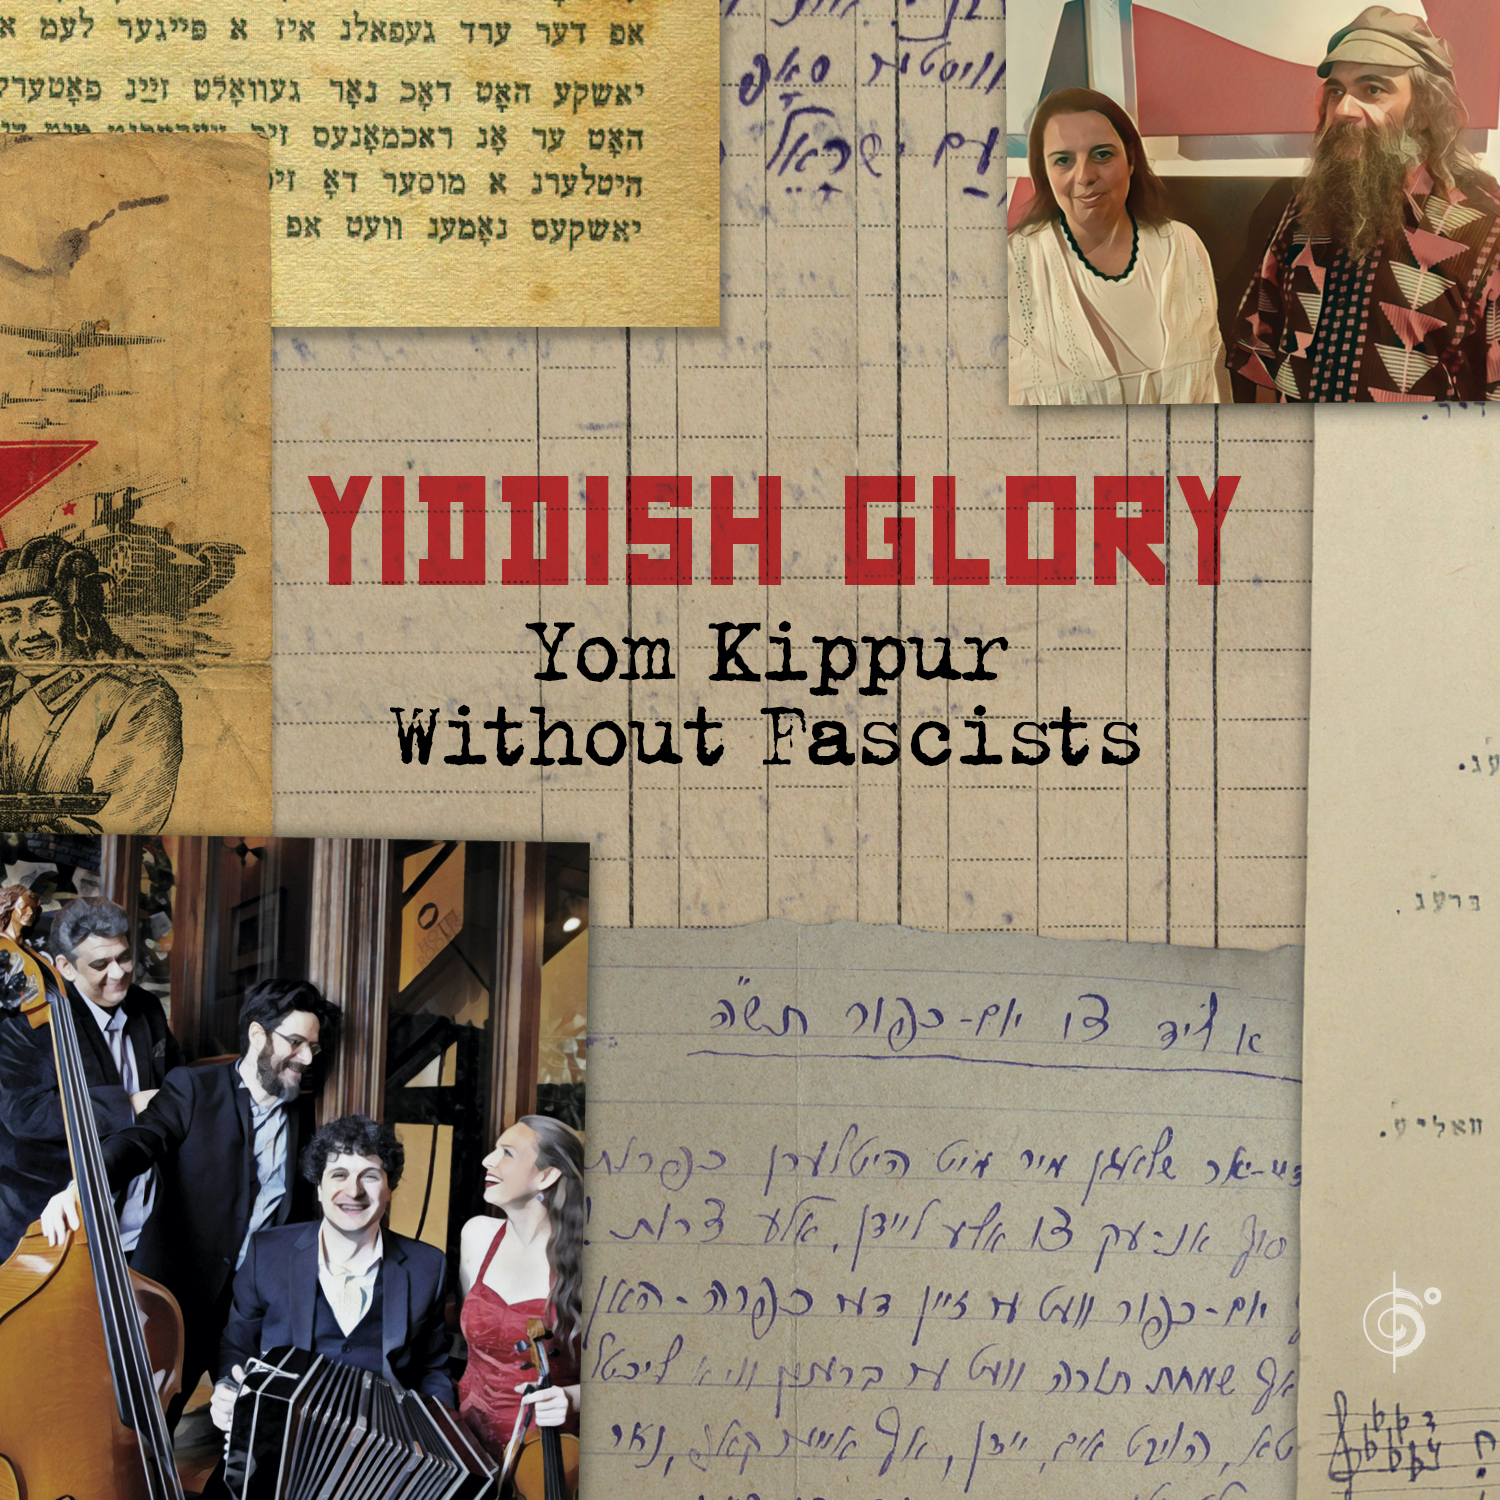 Yiddish Glory Yom Kippur Without Fascists